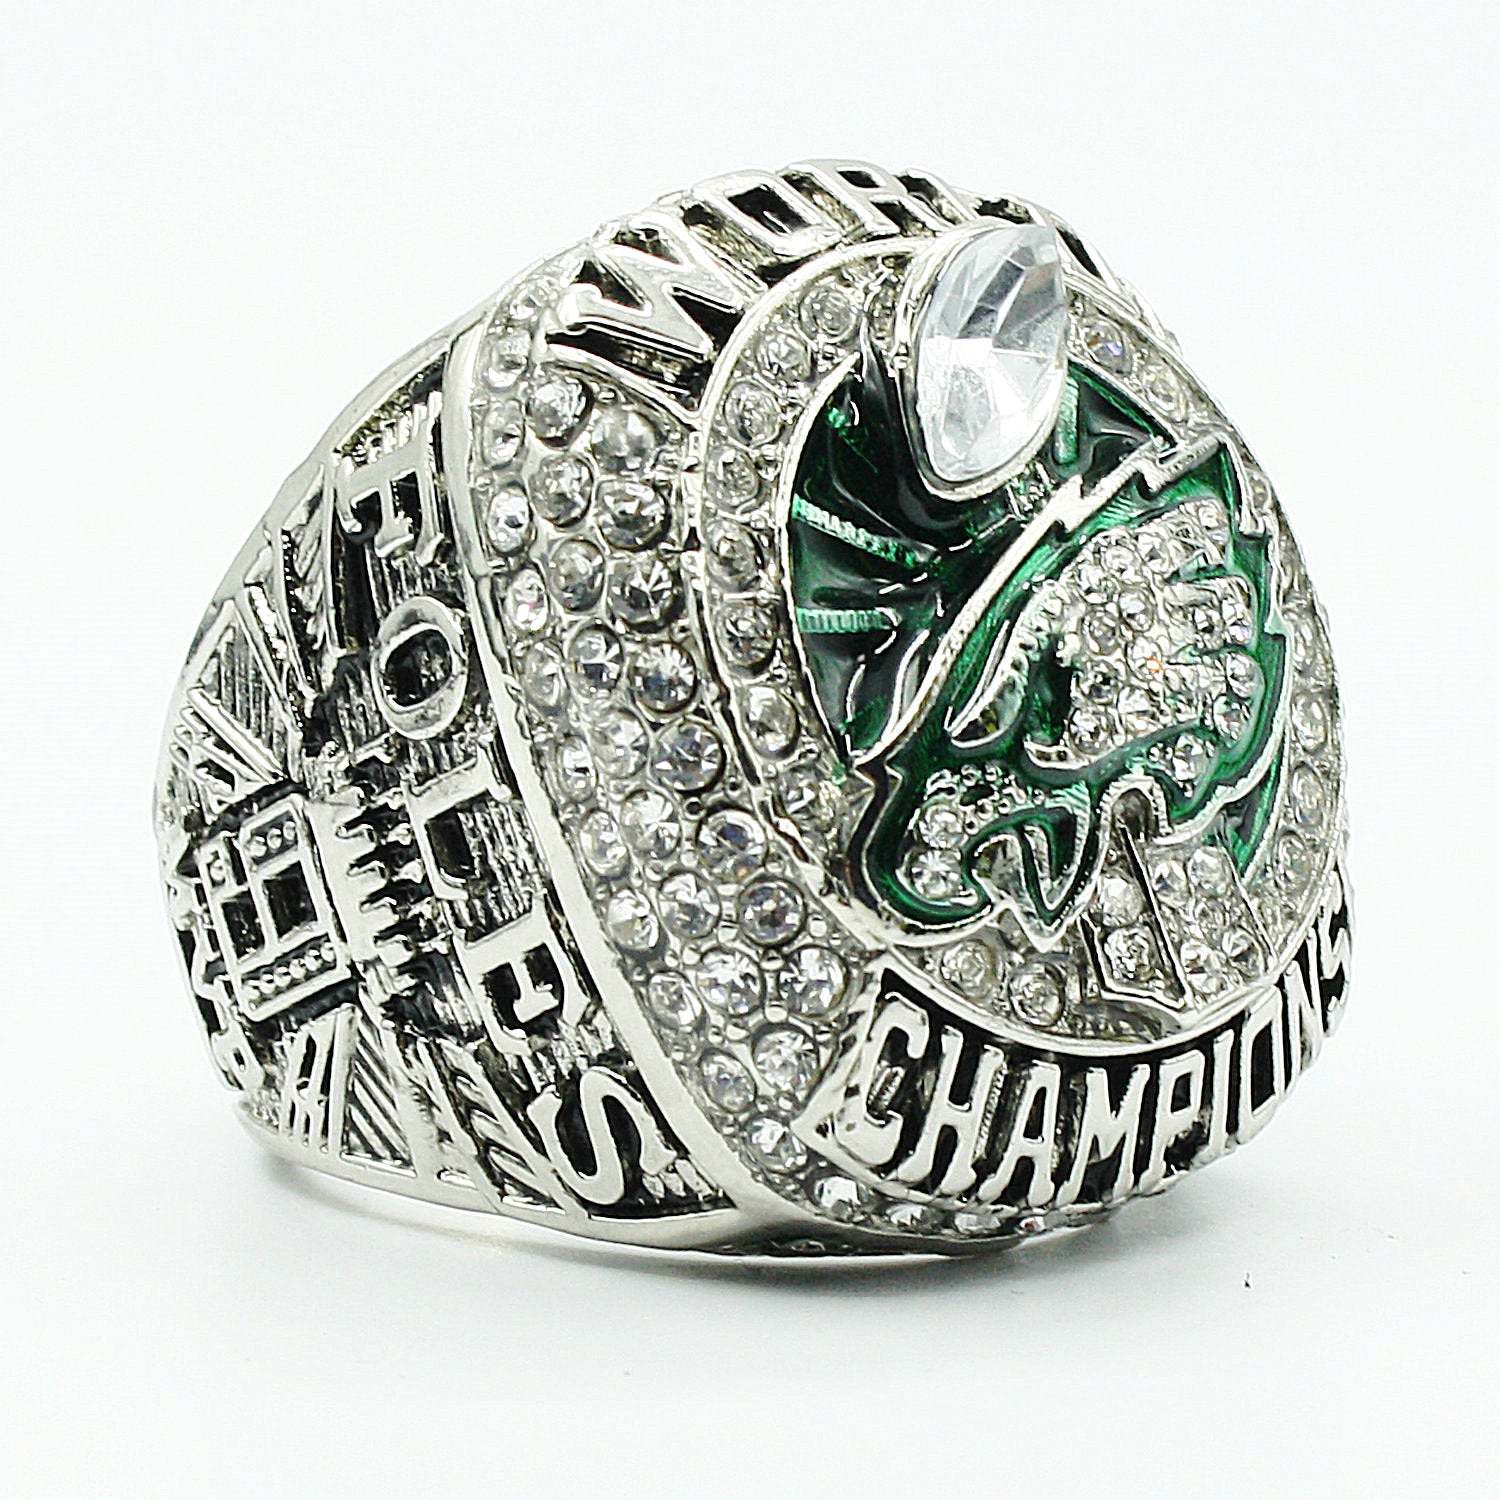 Primary image for NFL 2017 Philadelphia Eagles Super Bowl Championship Ring Replica